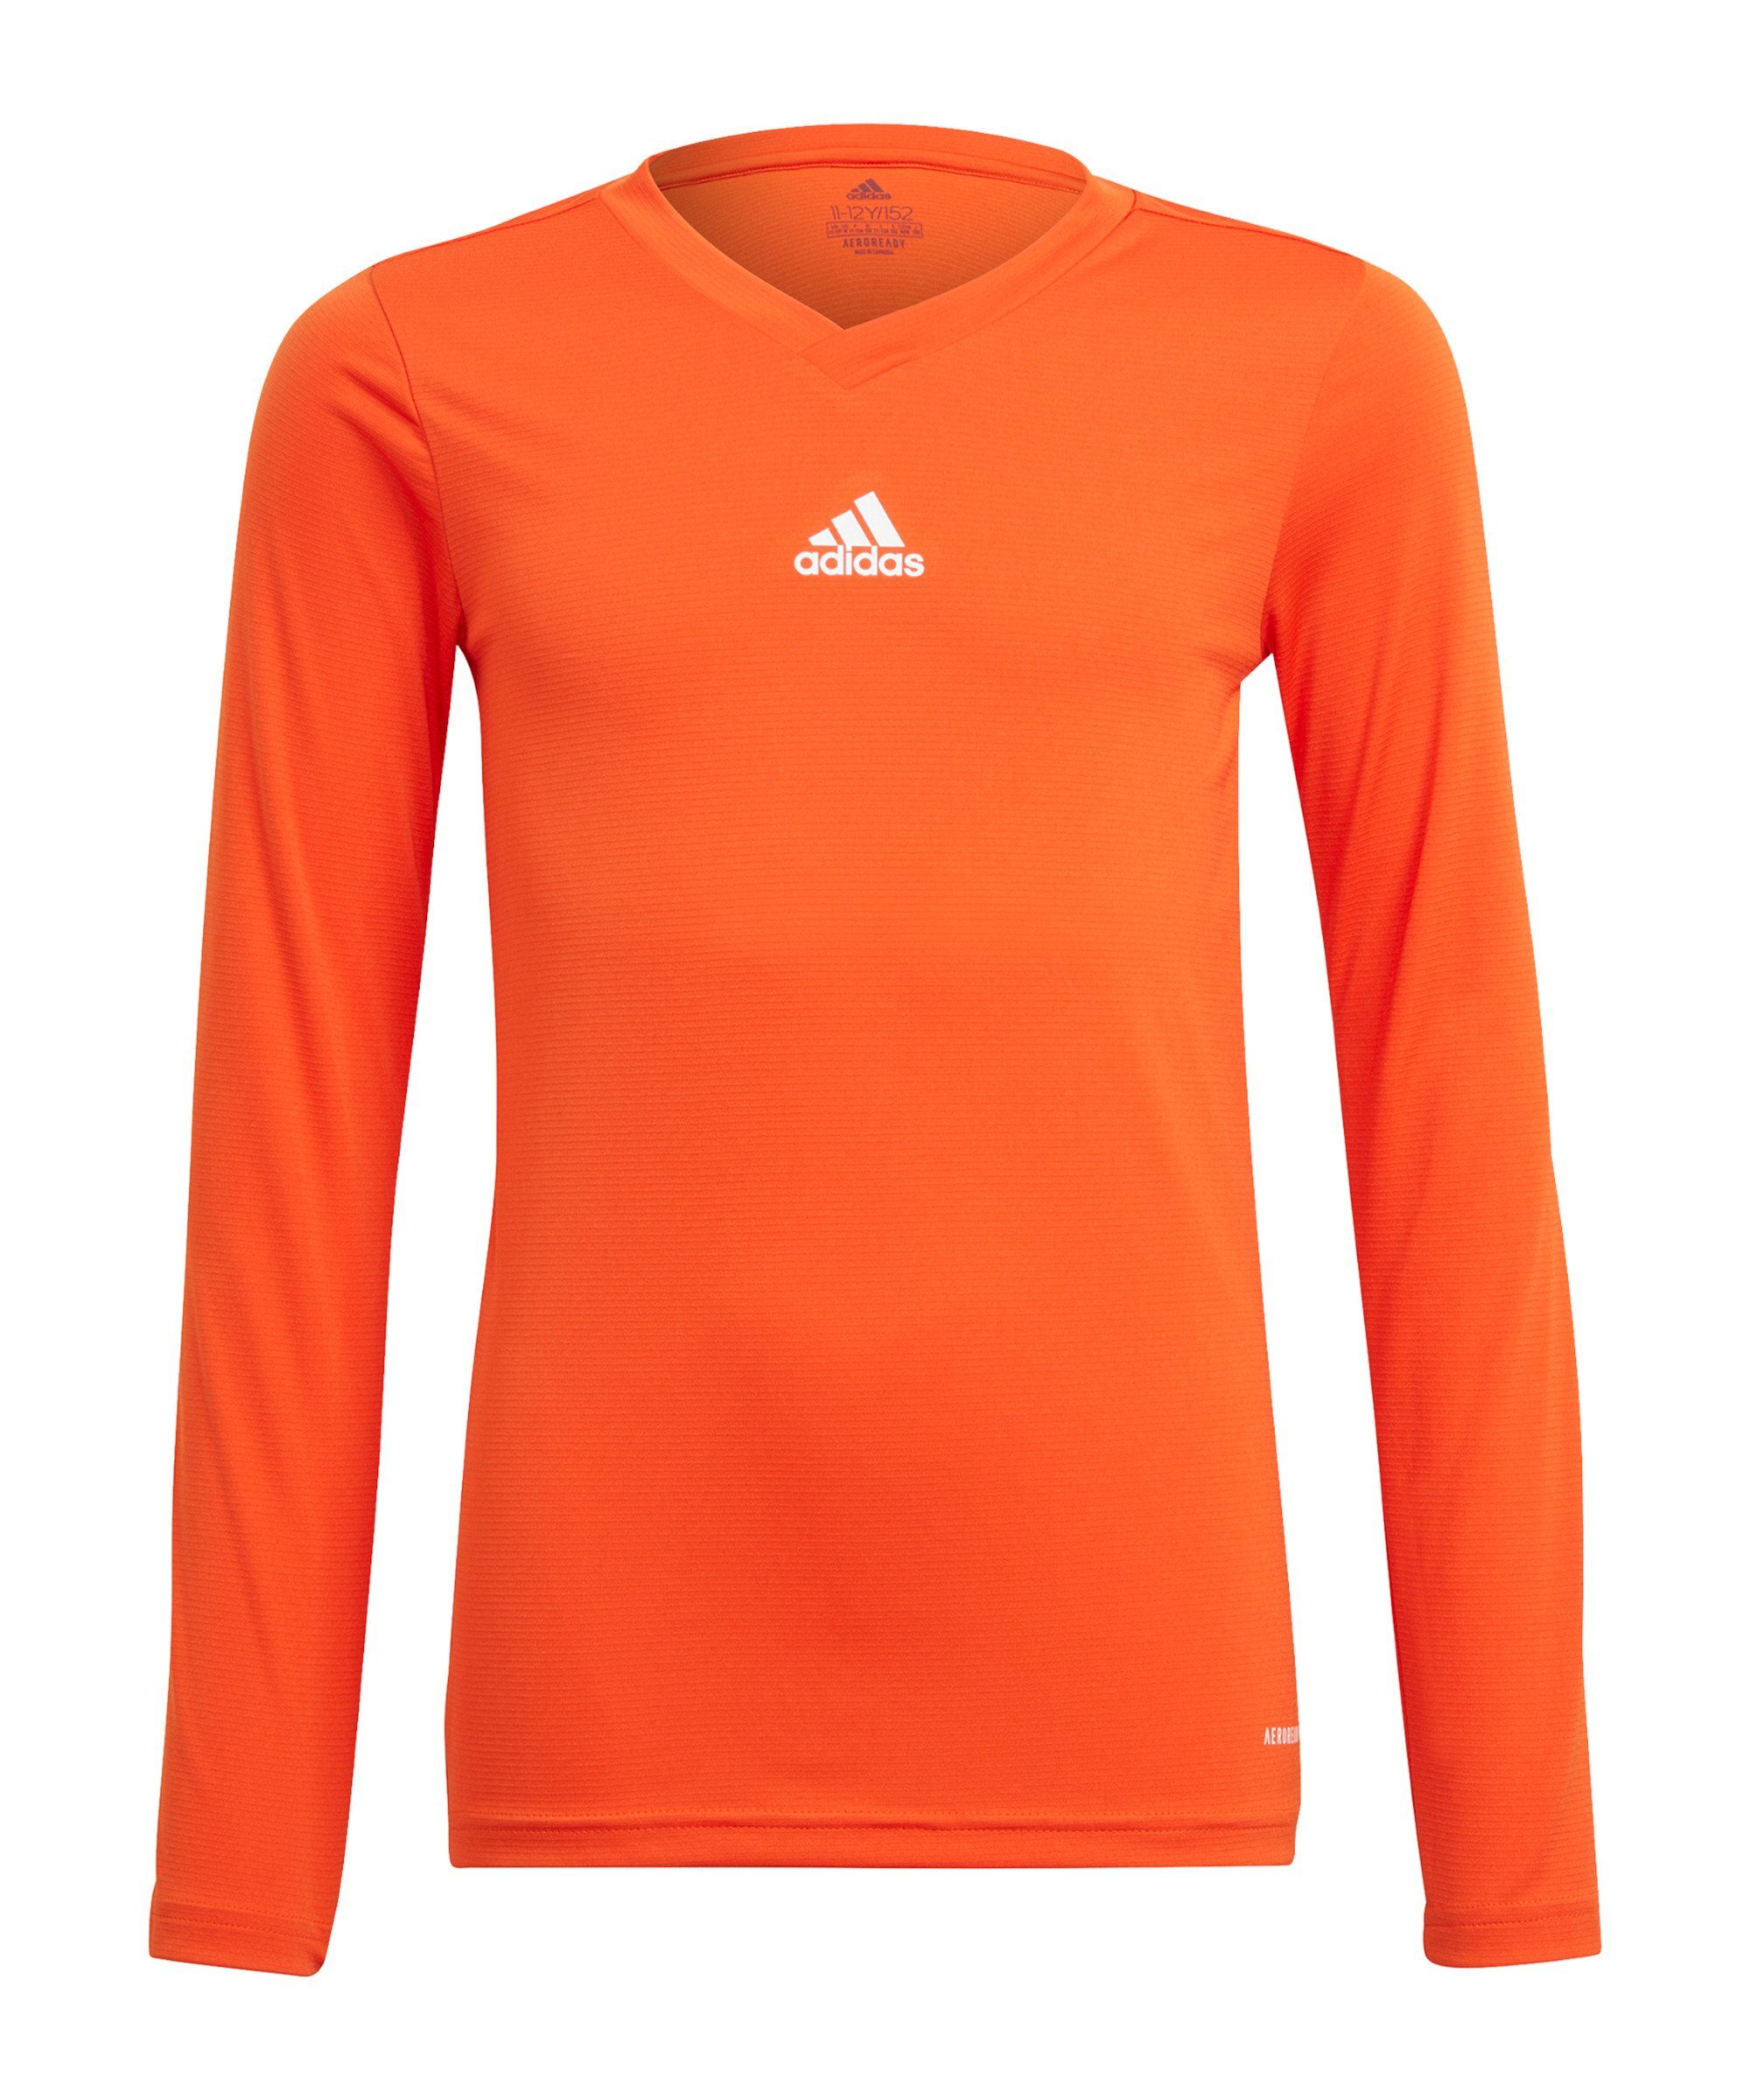 Team orange Performance default Dunkel adidas Top Kids langarm Funktionsshirt Base